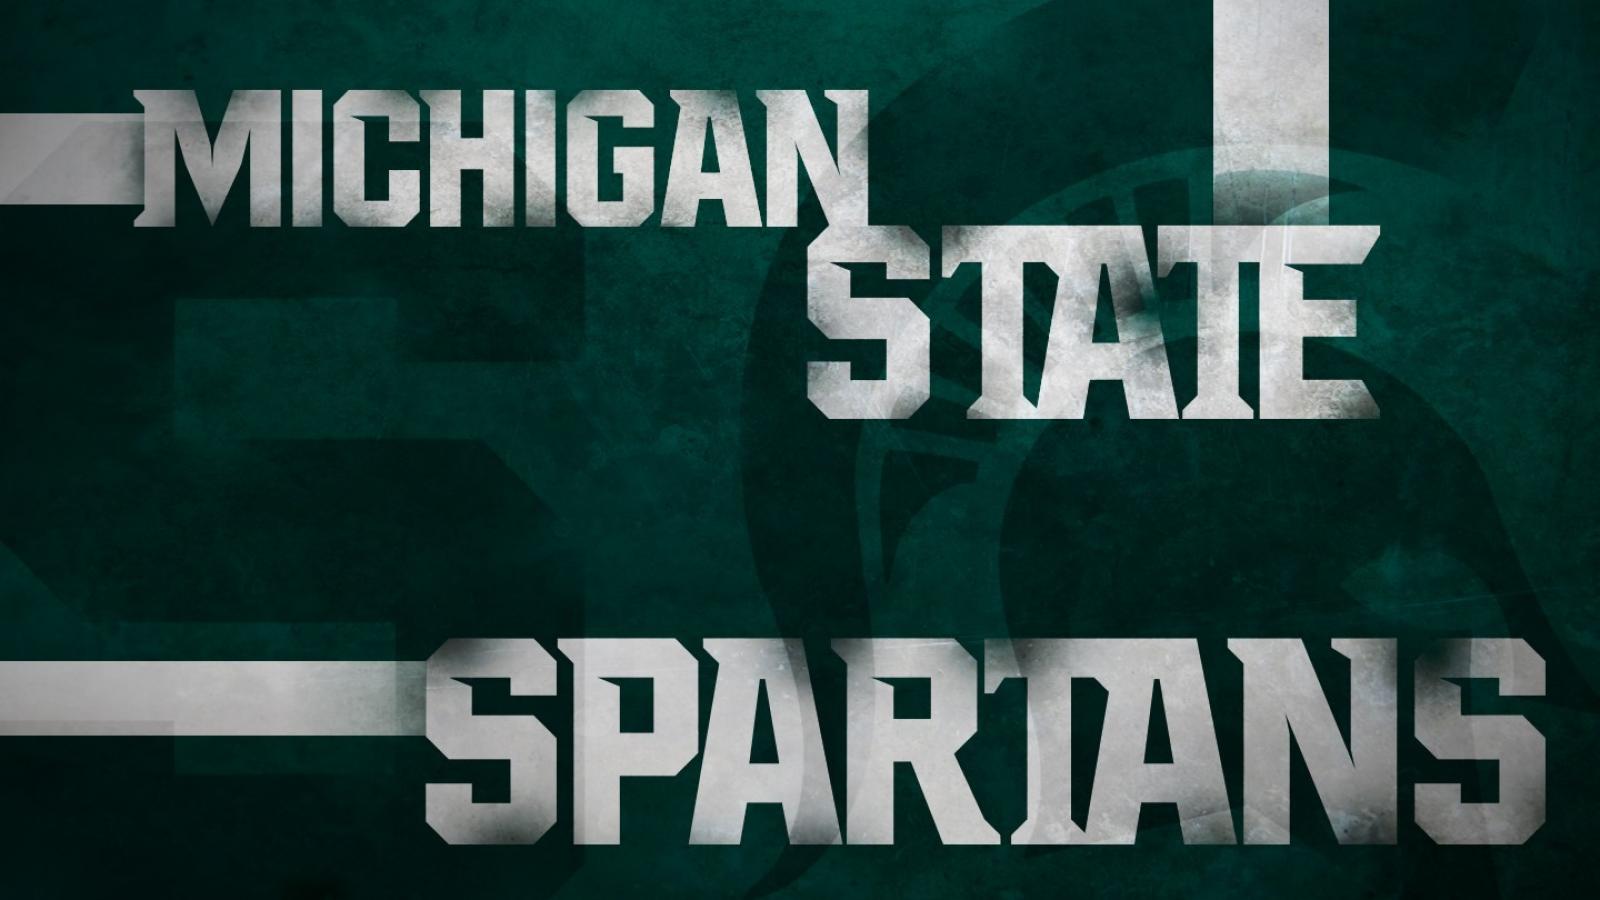 Michigan state spartans wallpaper 62795 1600x900